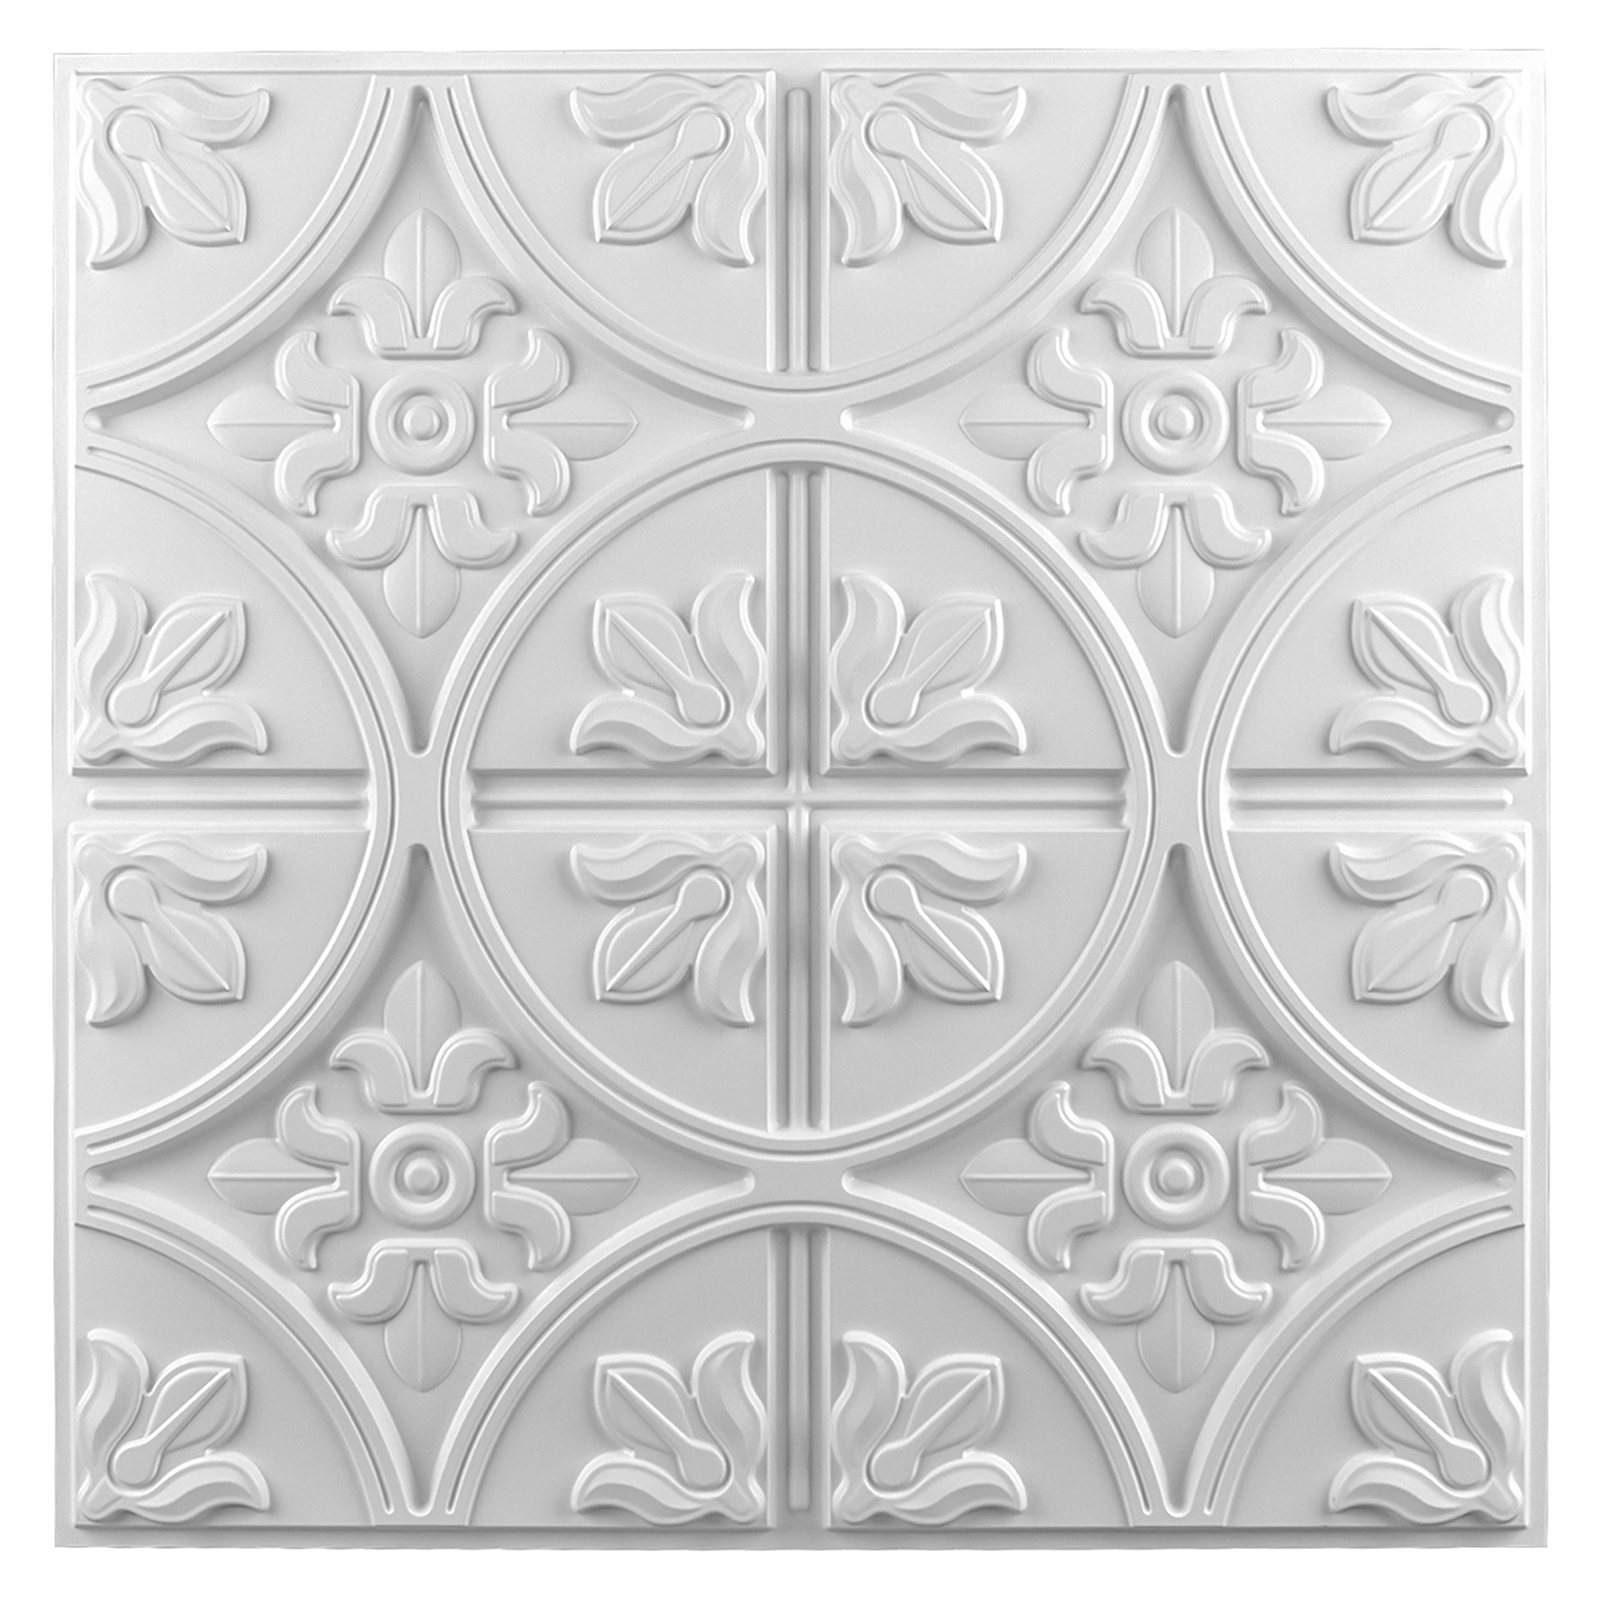 A10902P12-Art3d Decorative Drop Ceiling Tile 2x2 Pack Glue up Ceiling Panel Square Relief in Matt White